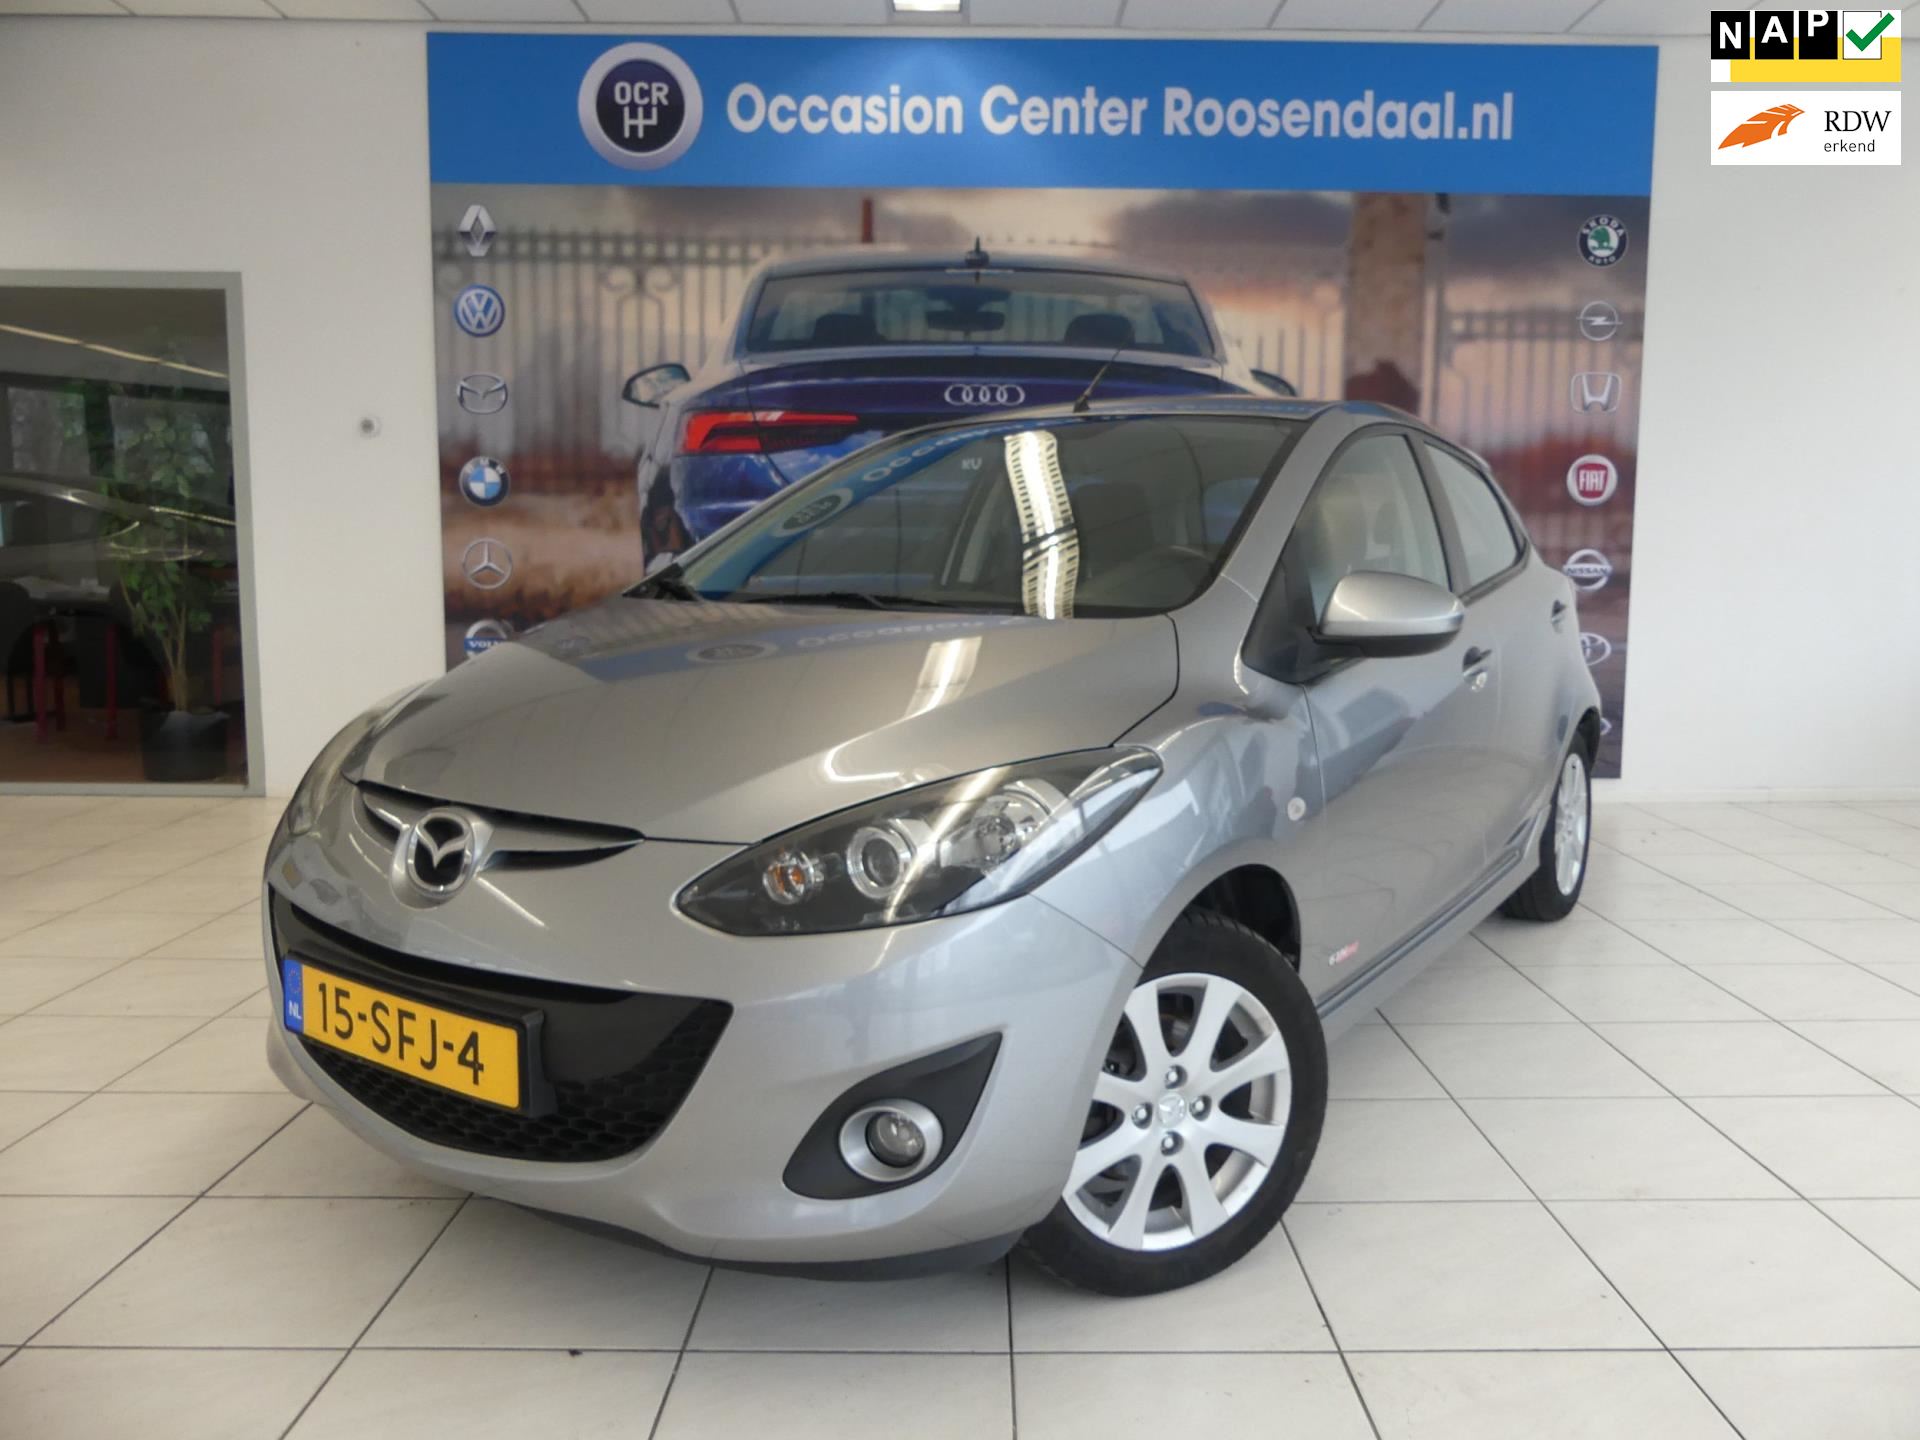 Mazda 2 occasion - Occasion Center Roosendaal